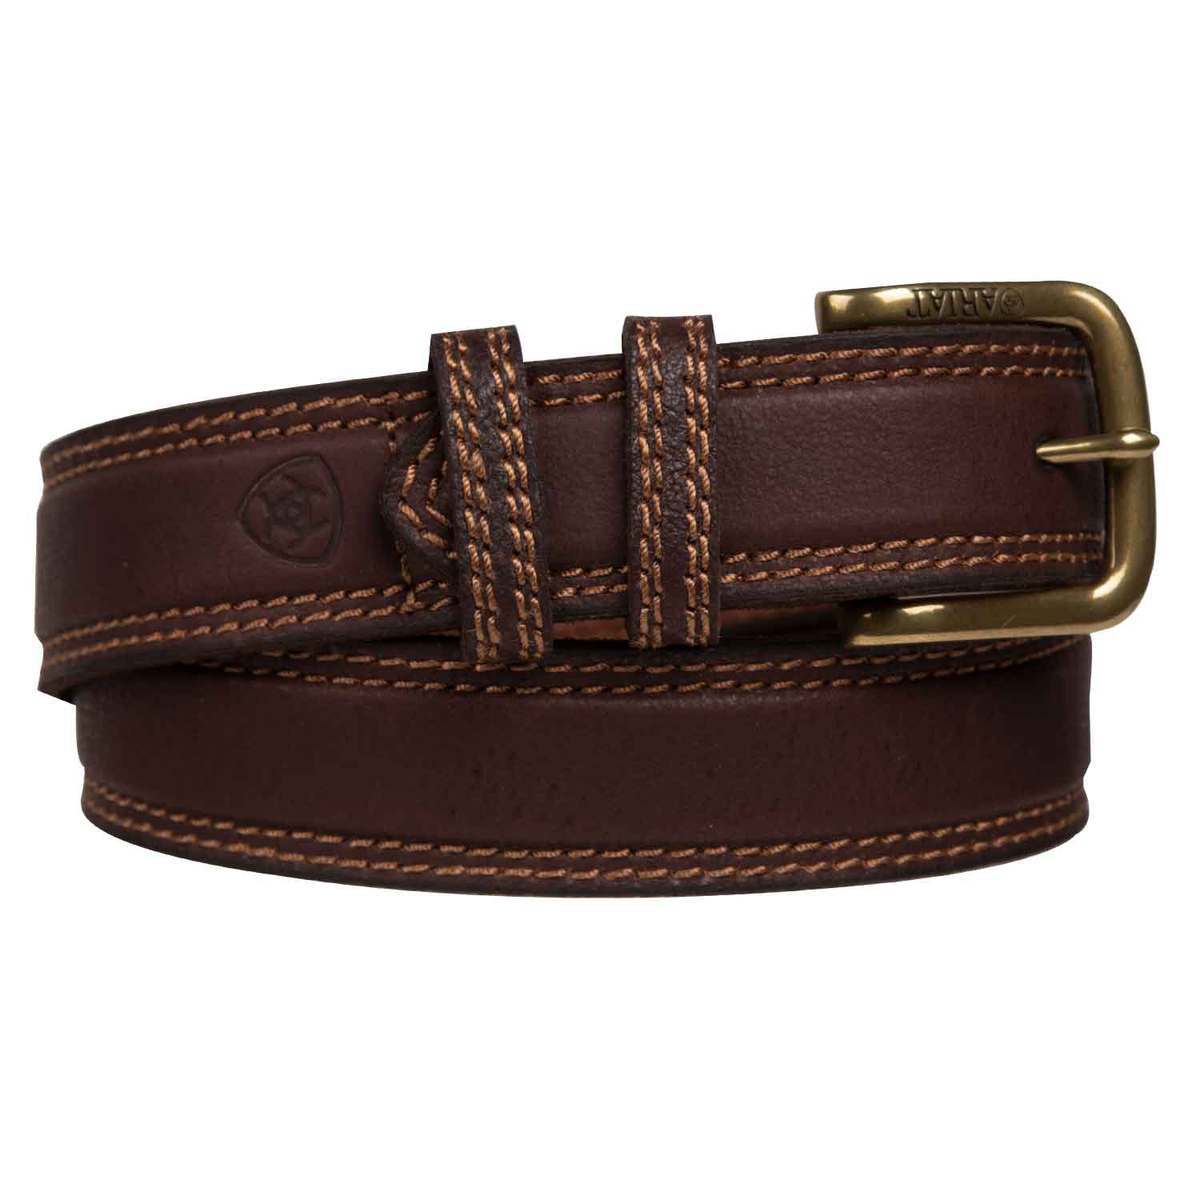 Classic Stitched Leather Belt